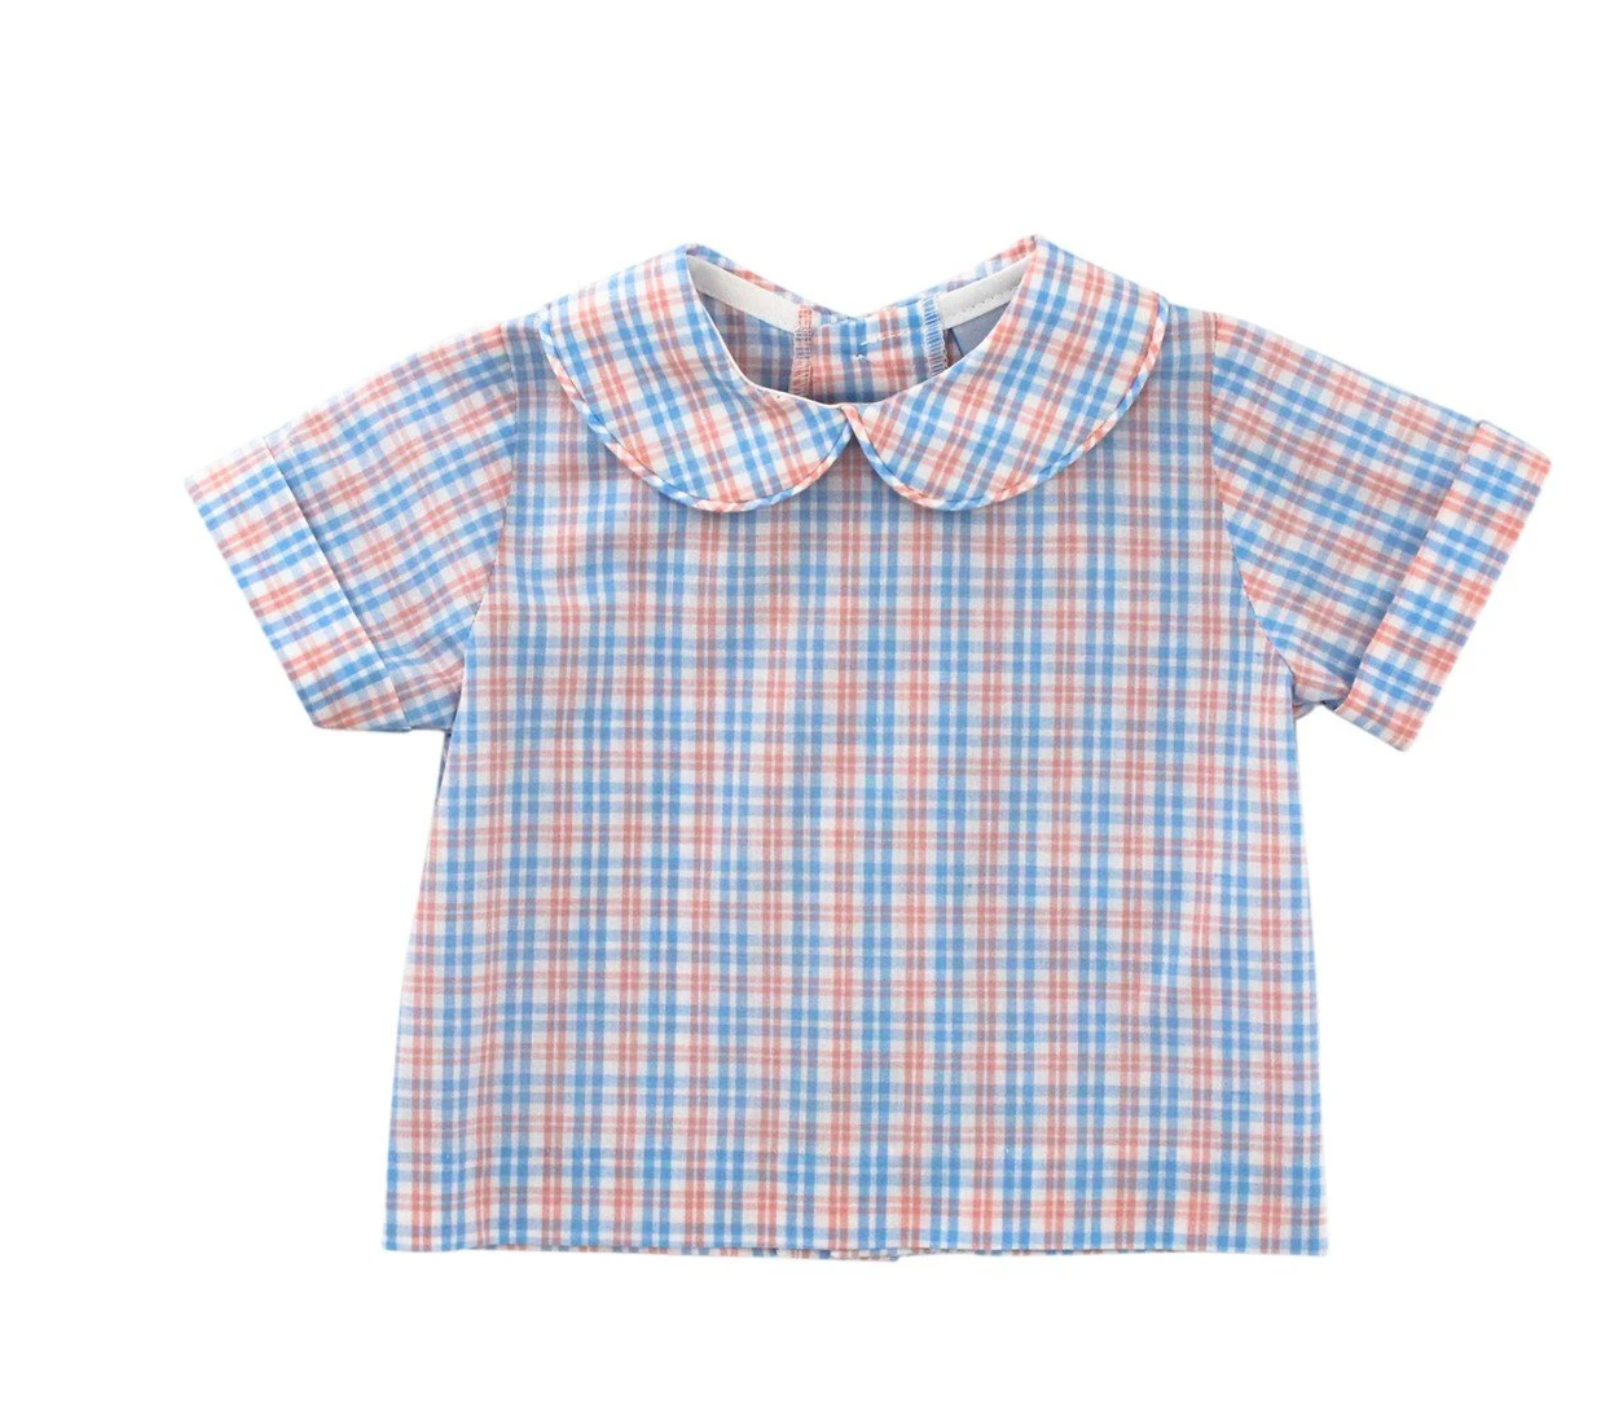 Augusta Plaid/Sky Boy's Piped Shirt